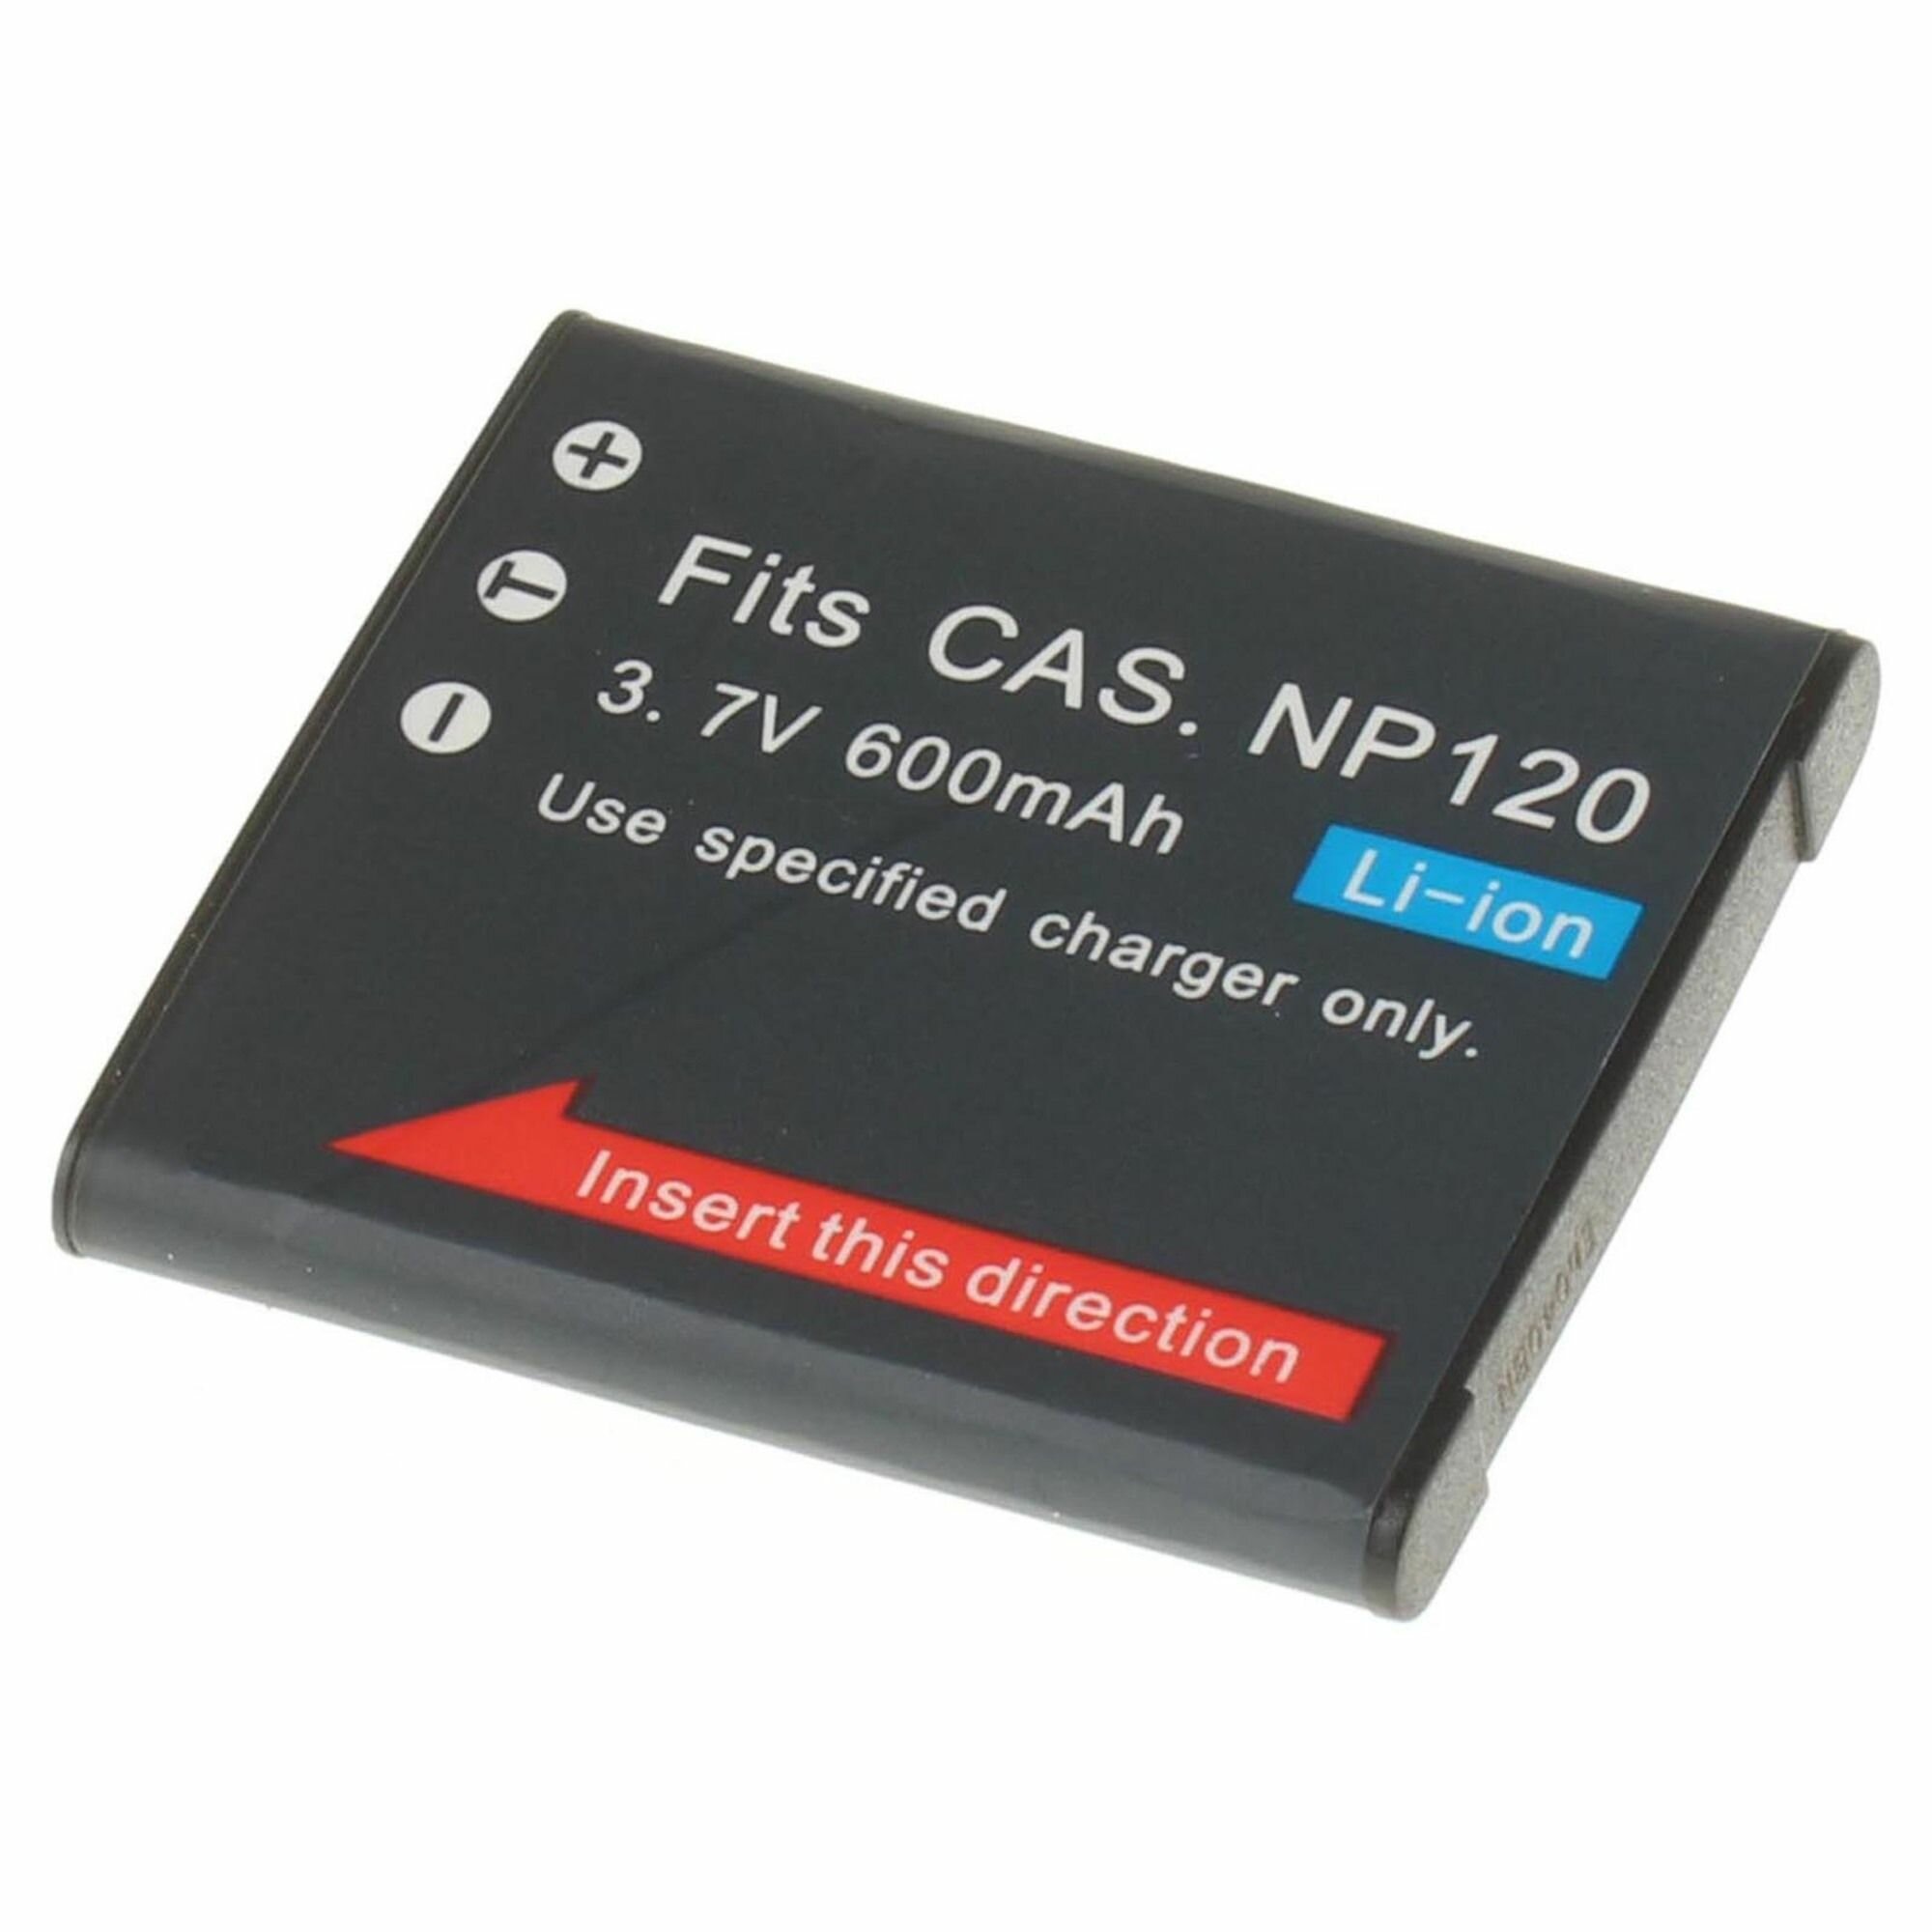 Аккумуляторная батарея iBatt iB-A1-F137 630mAh, для камер NP-120